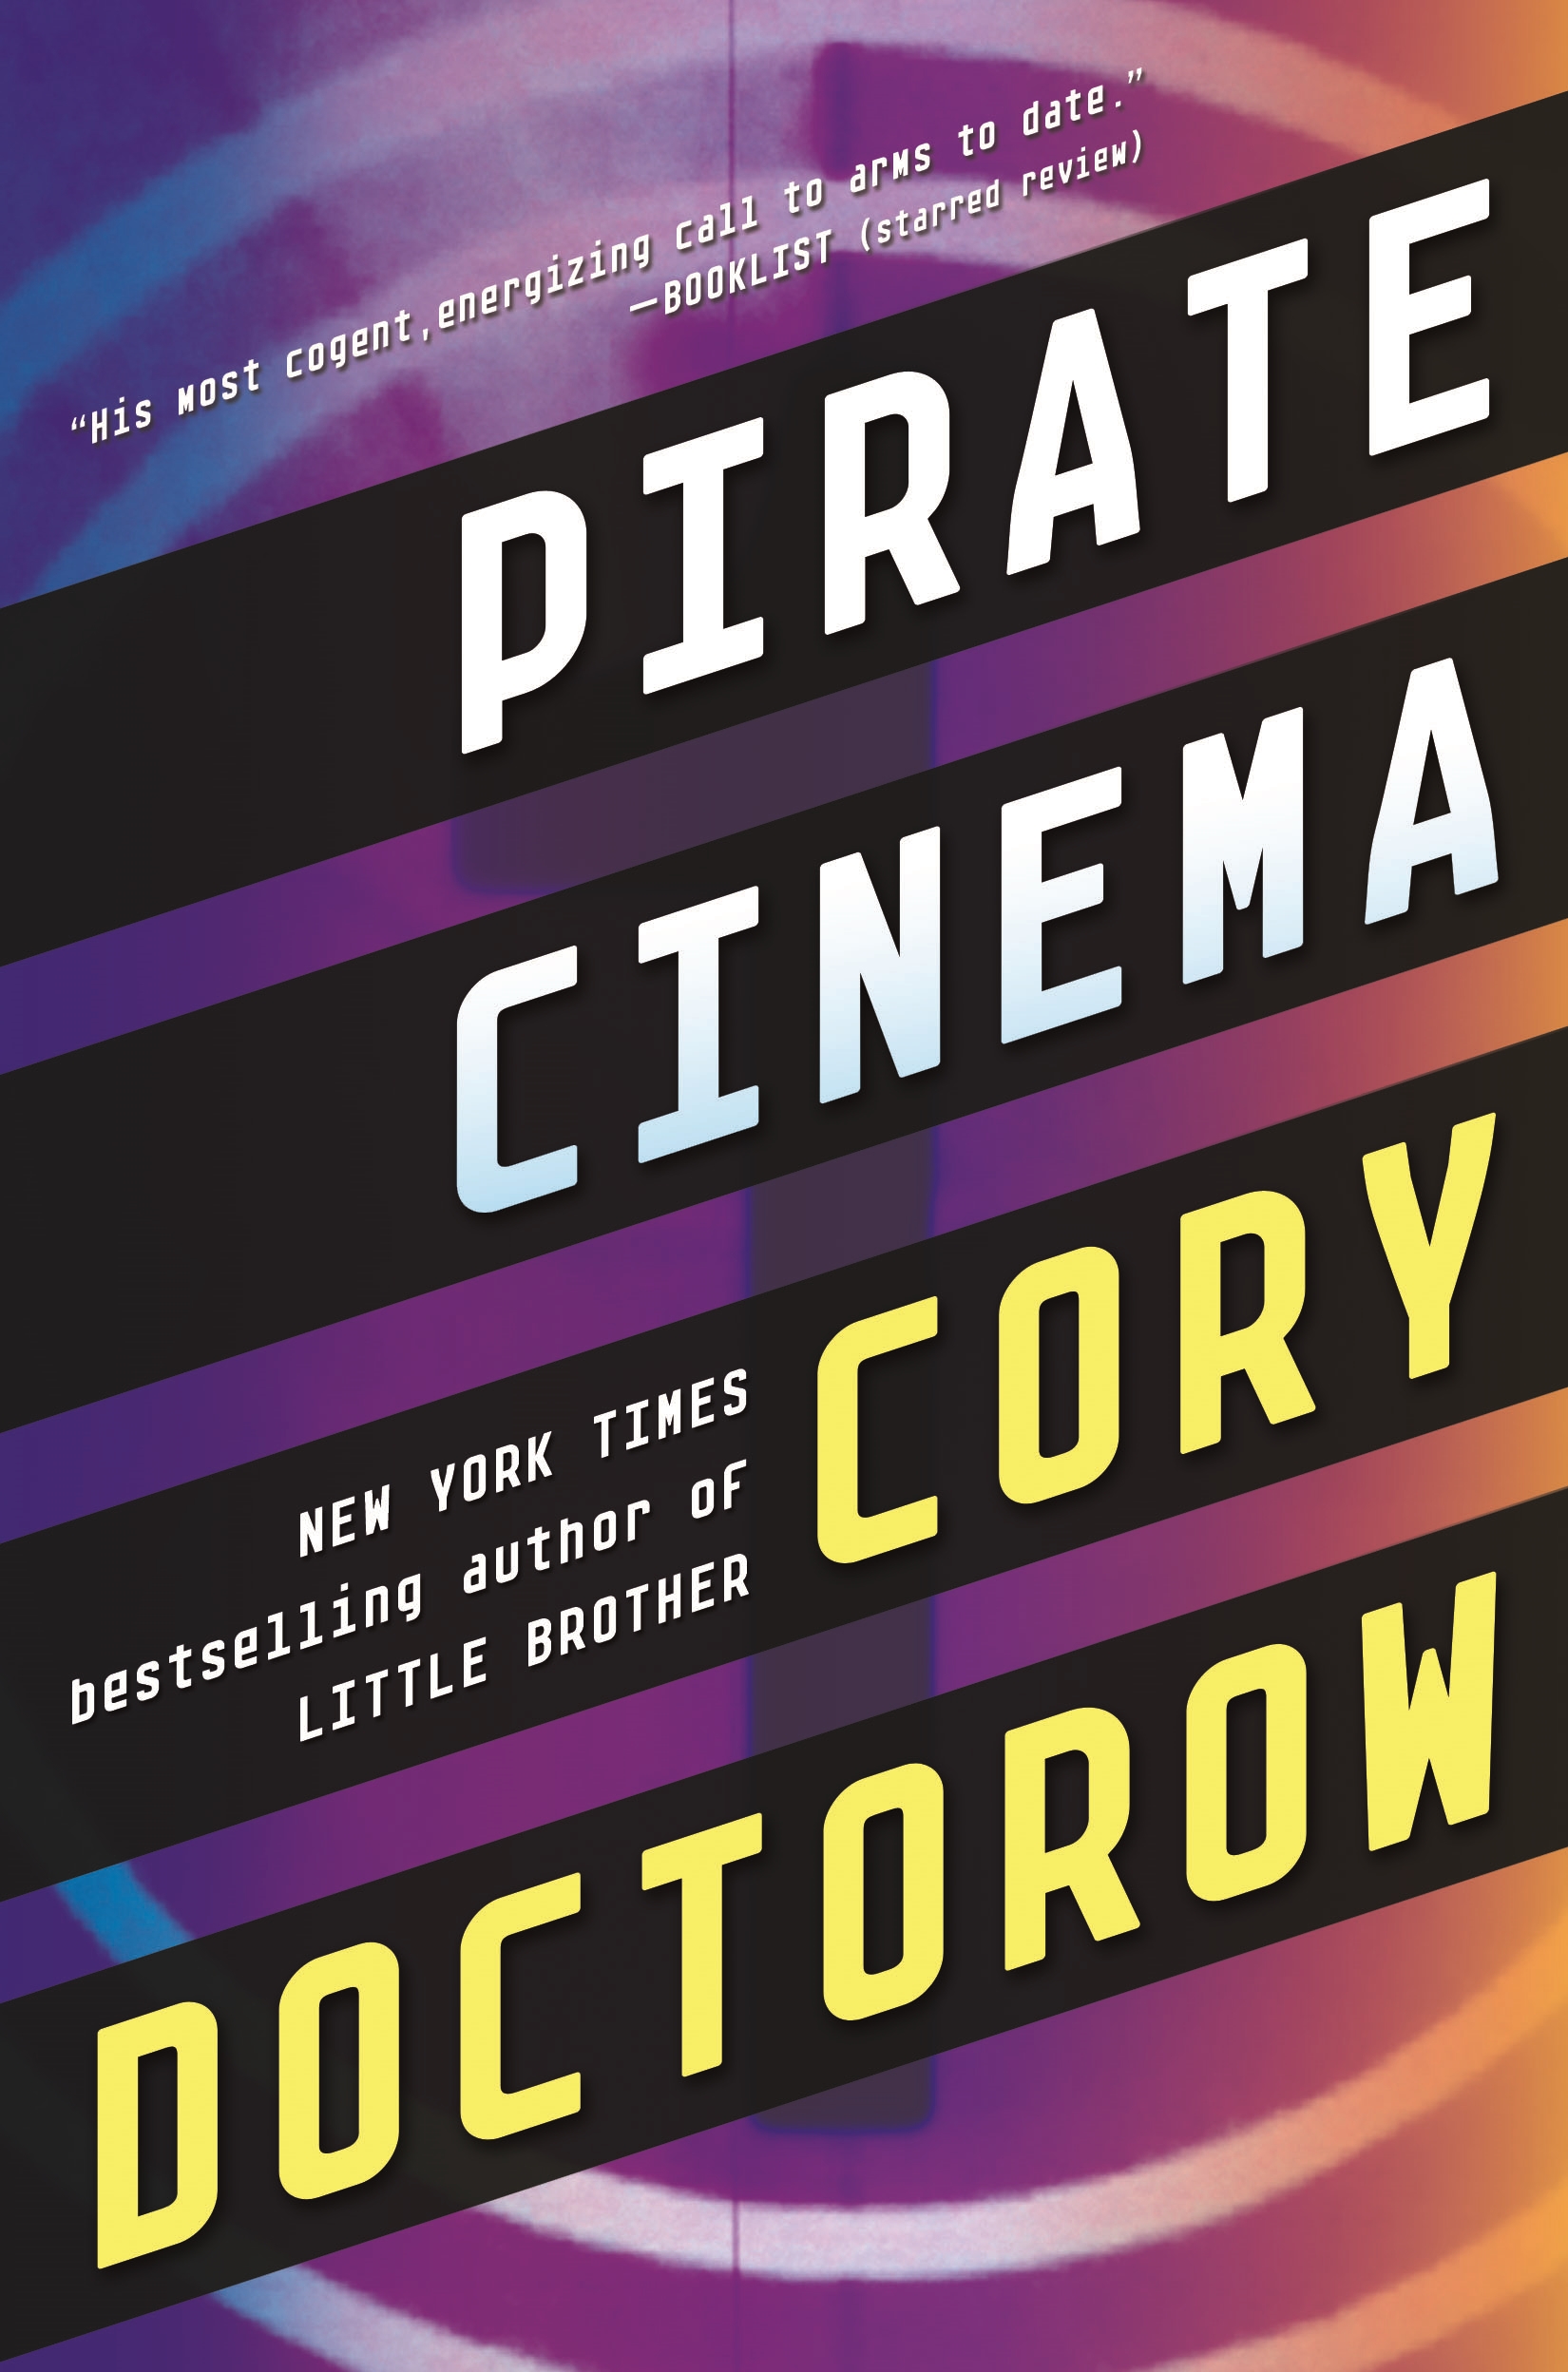 Pirate Cinema by Cory Doctorow